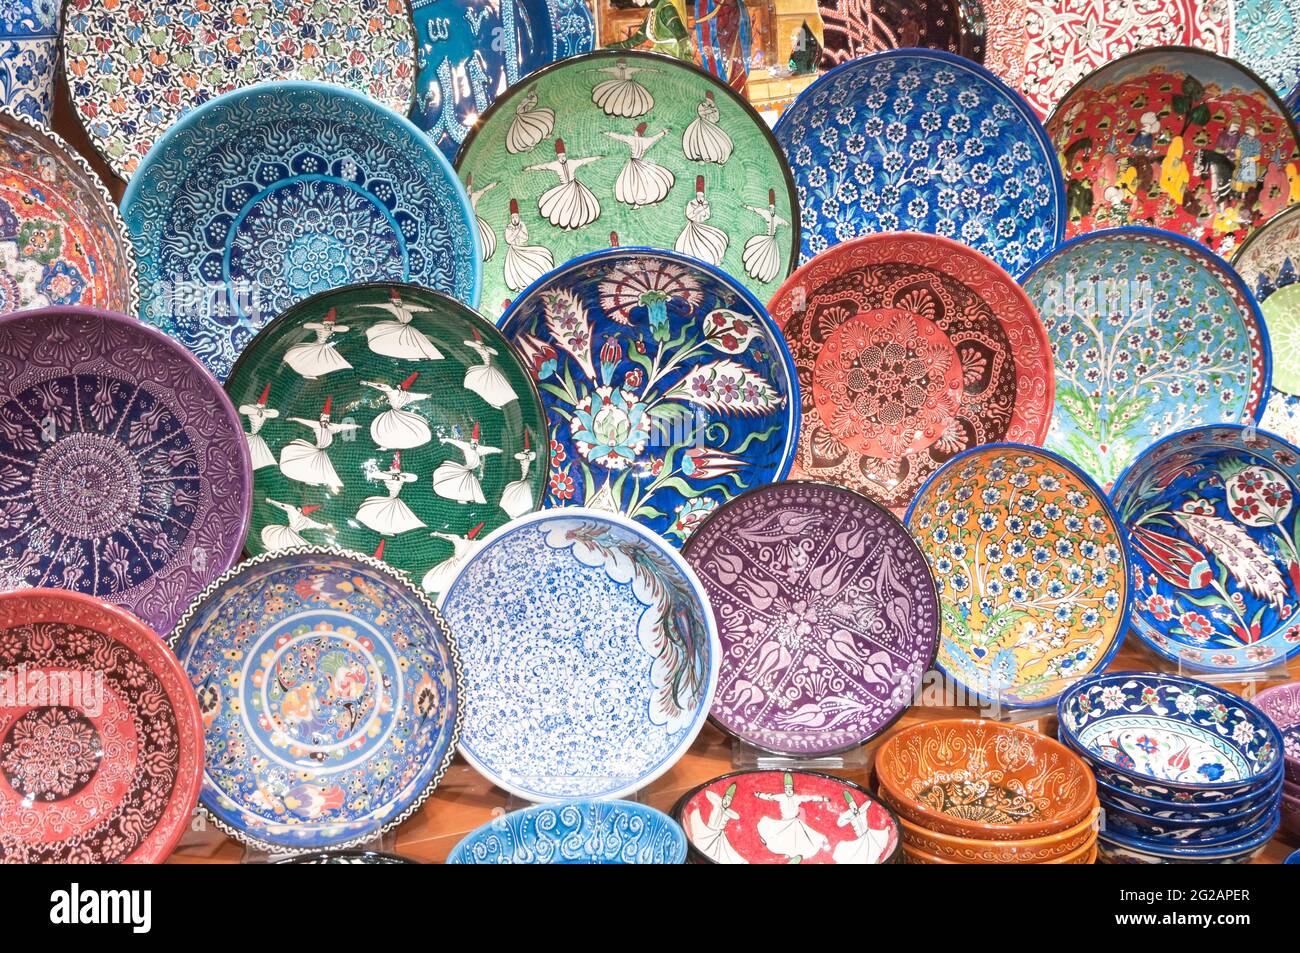 Istanbul, Türkei - 19. Juli 2010: Bunt dekorierte Teller Keramik im Großen Basar von Istanbul Stockfoto